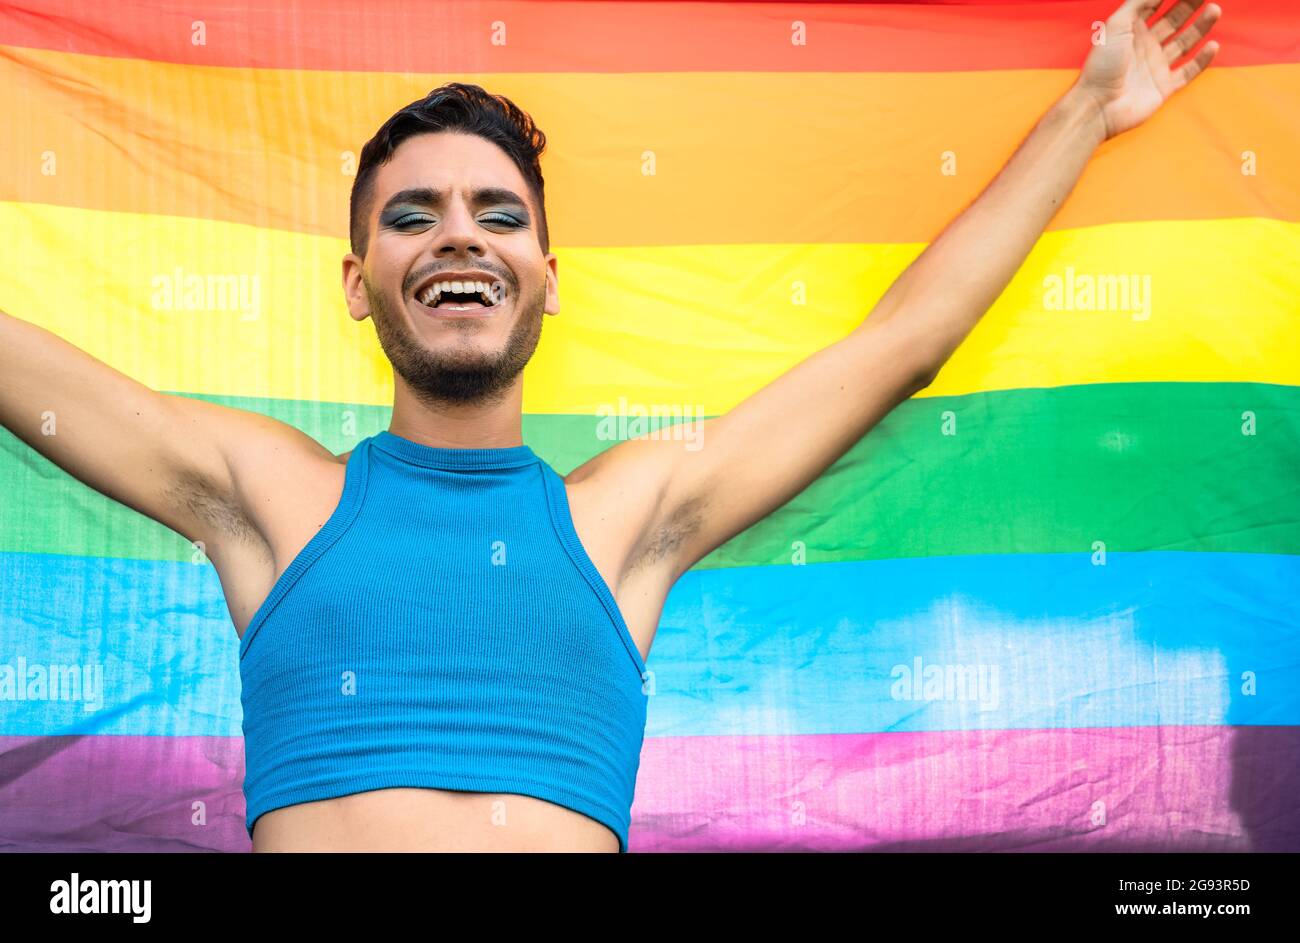 Happy homosexual man celebrating gay pride holding rainbow flag symbol of LGBTQ community Stock Photo